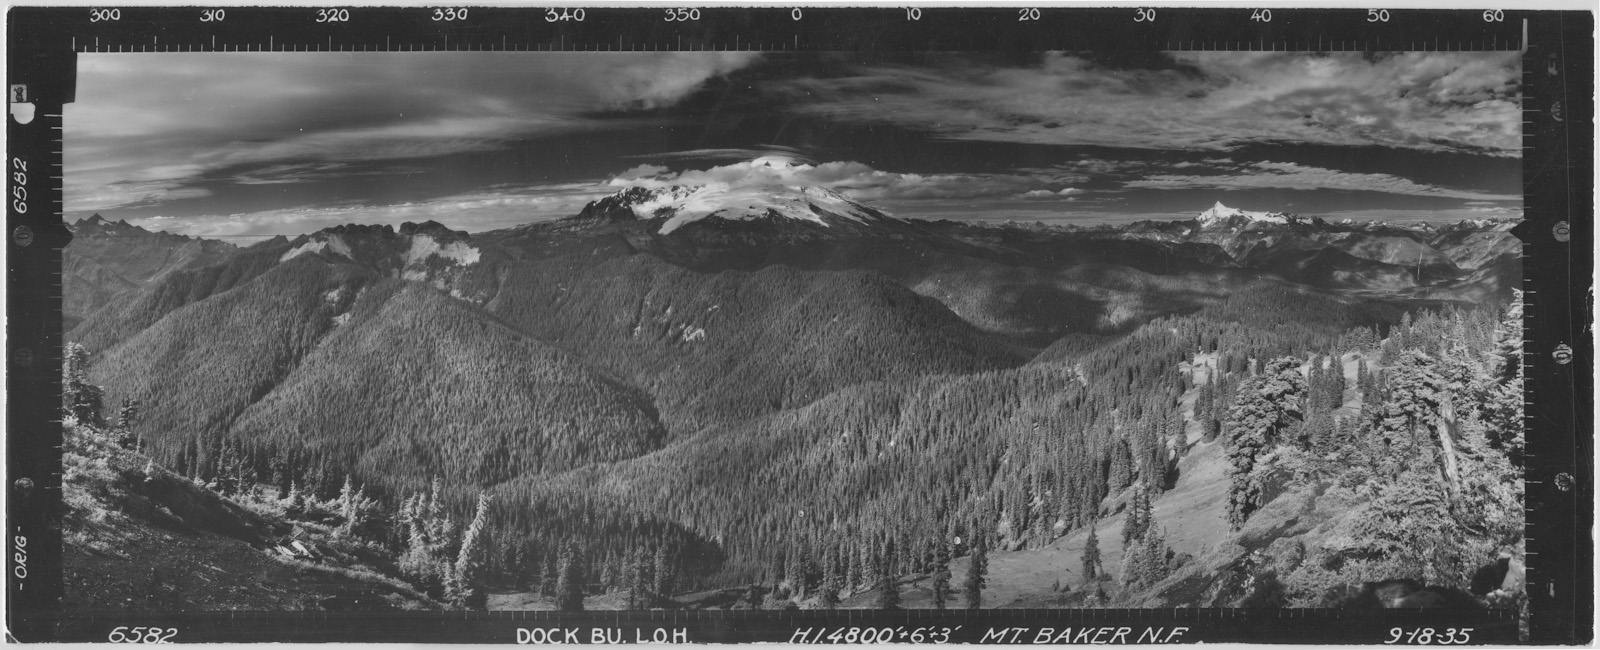 Mount Baker From The Dock Butte Fire Lookout, 1935<br> (6582compDR-1.jpg)